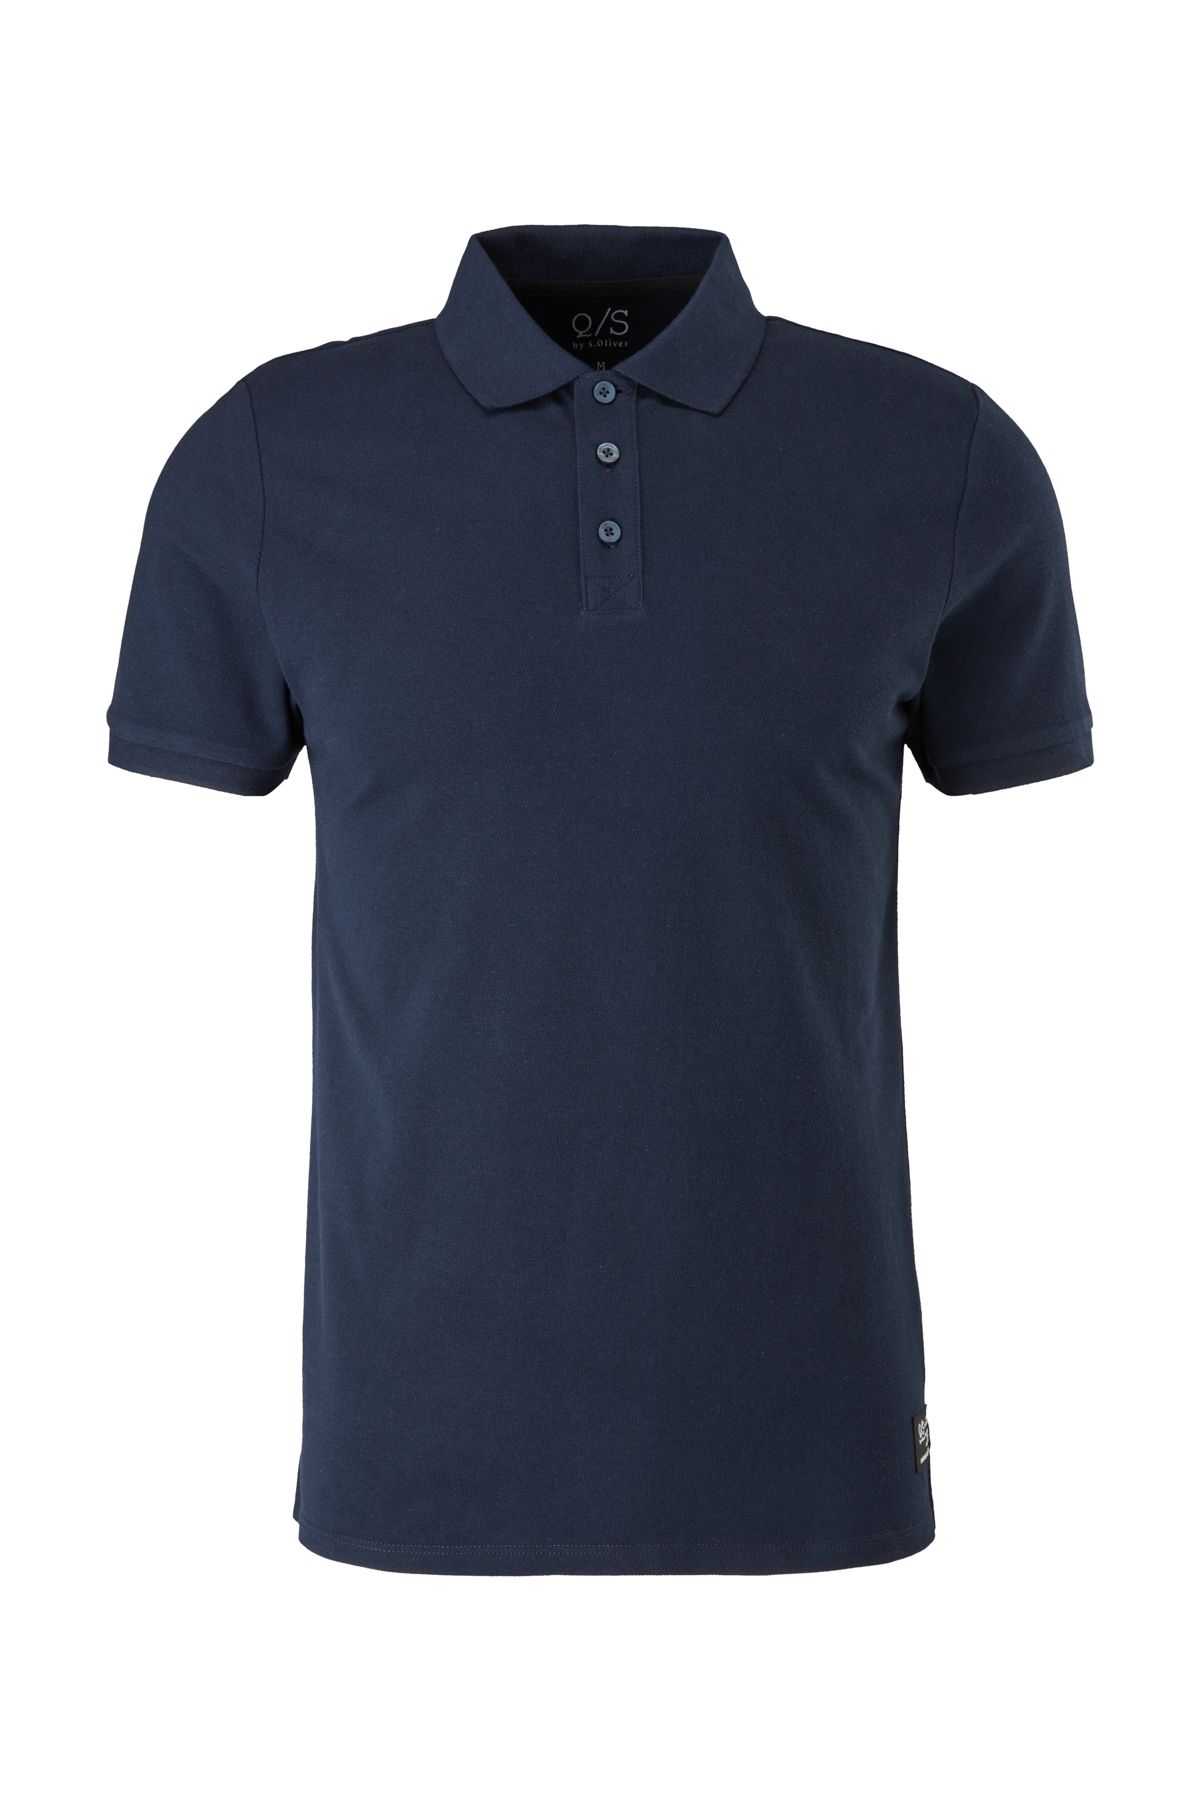 QS by s.Oliver Trendyol - Fit Blau Poloshirt Regular - 